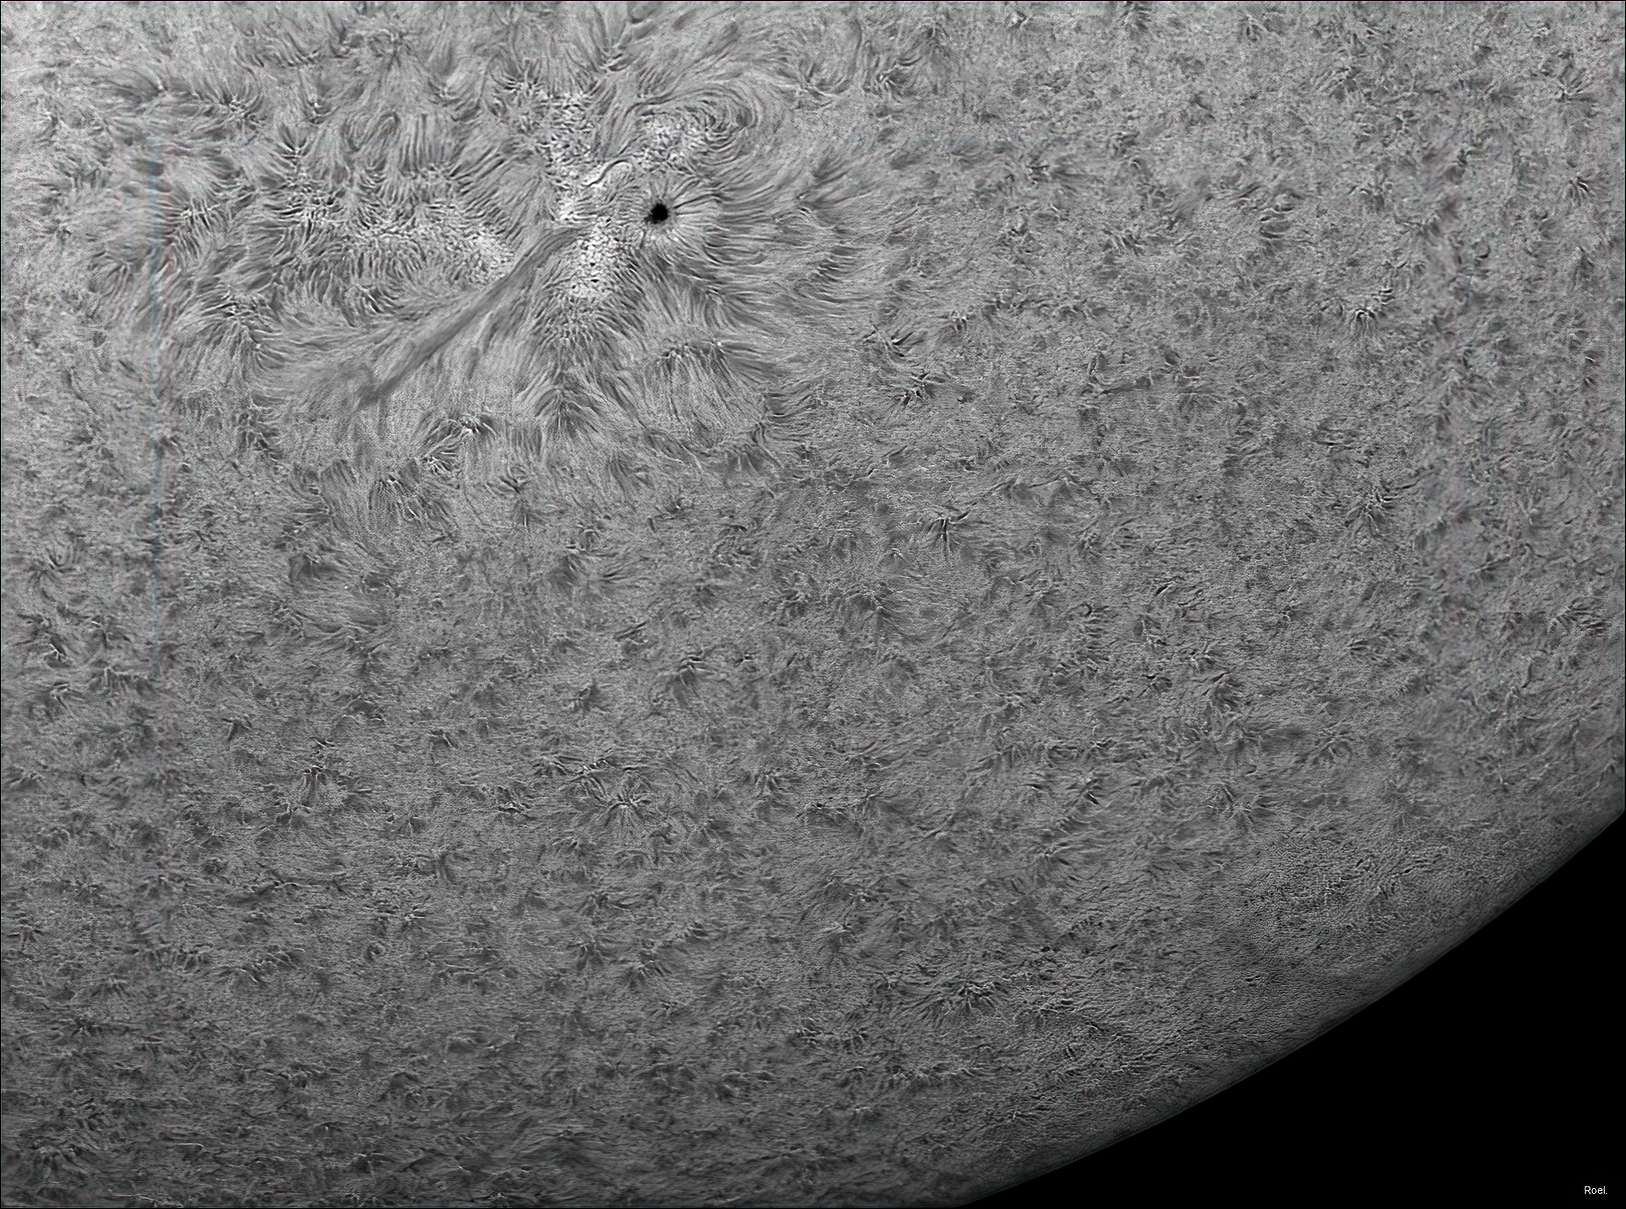 Sol del 10 de junio del 2020-Stellarvue-Daystar-6az.jpg